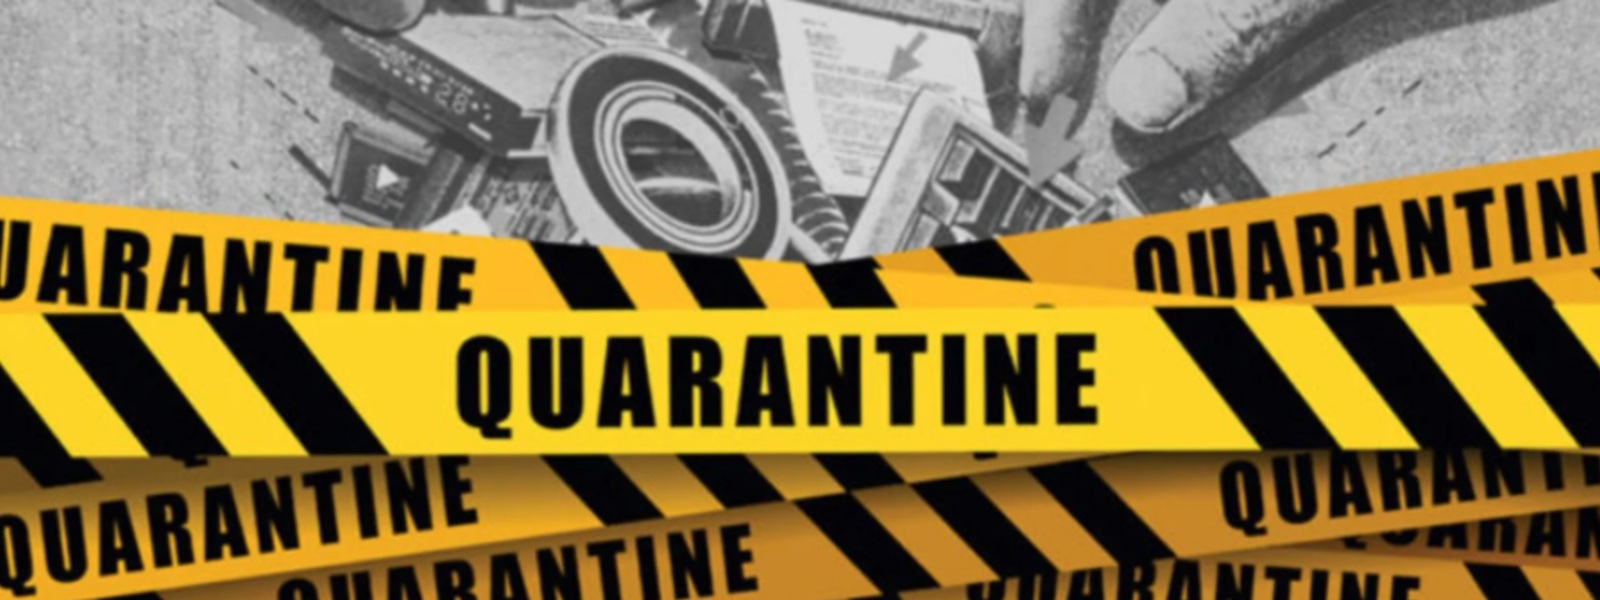 6,882 people in 75 tri-service-managed QCs are still in Quarantine